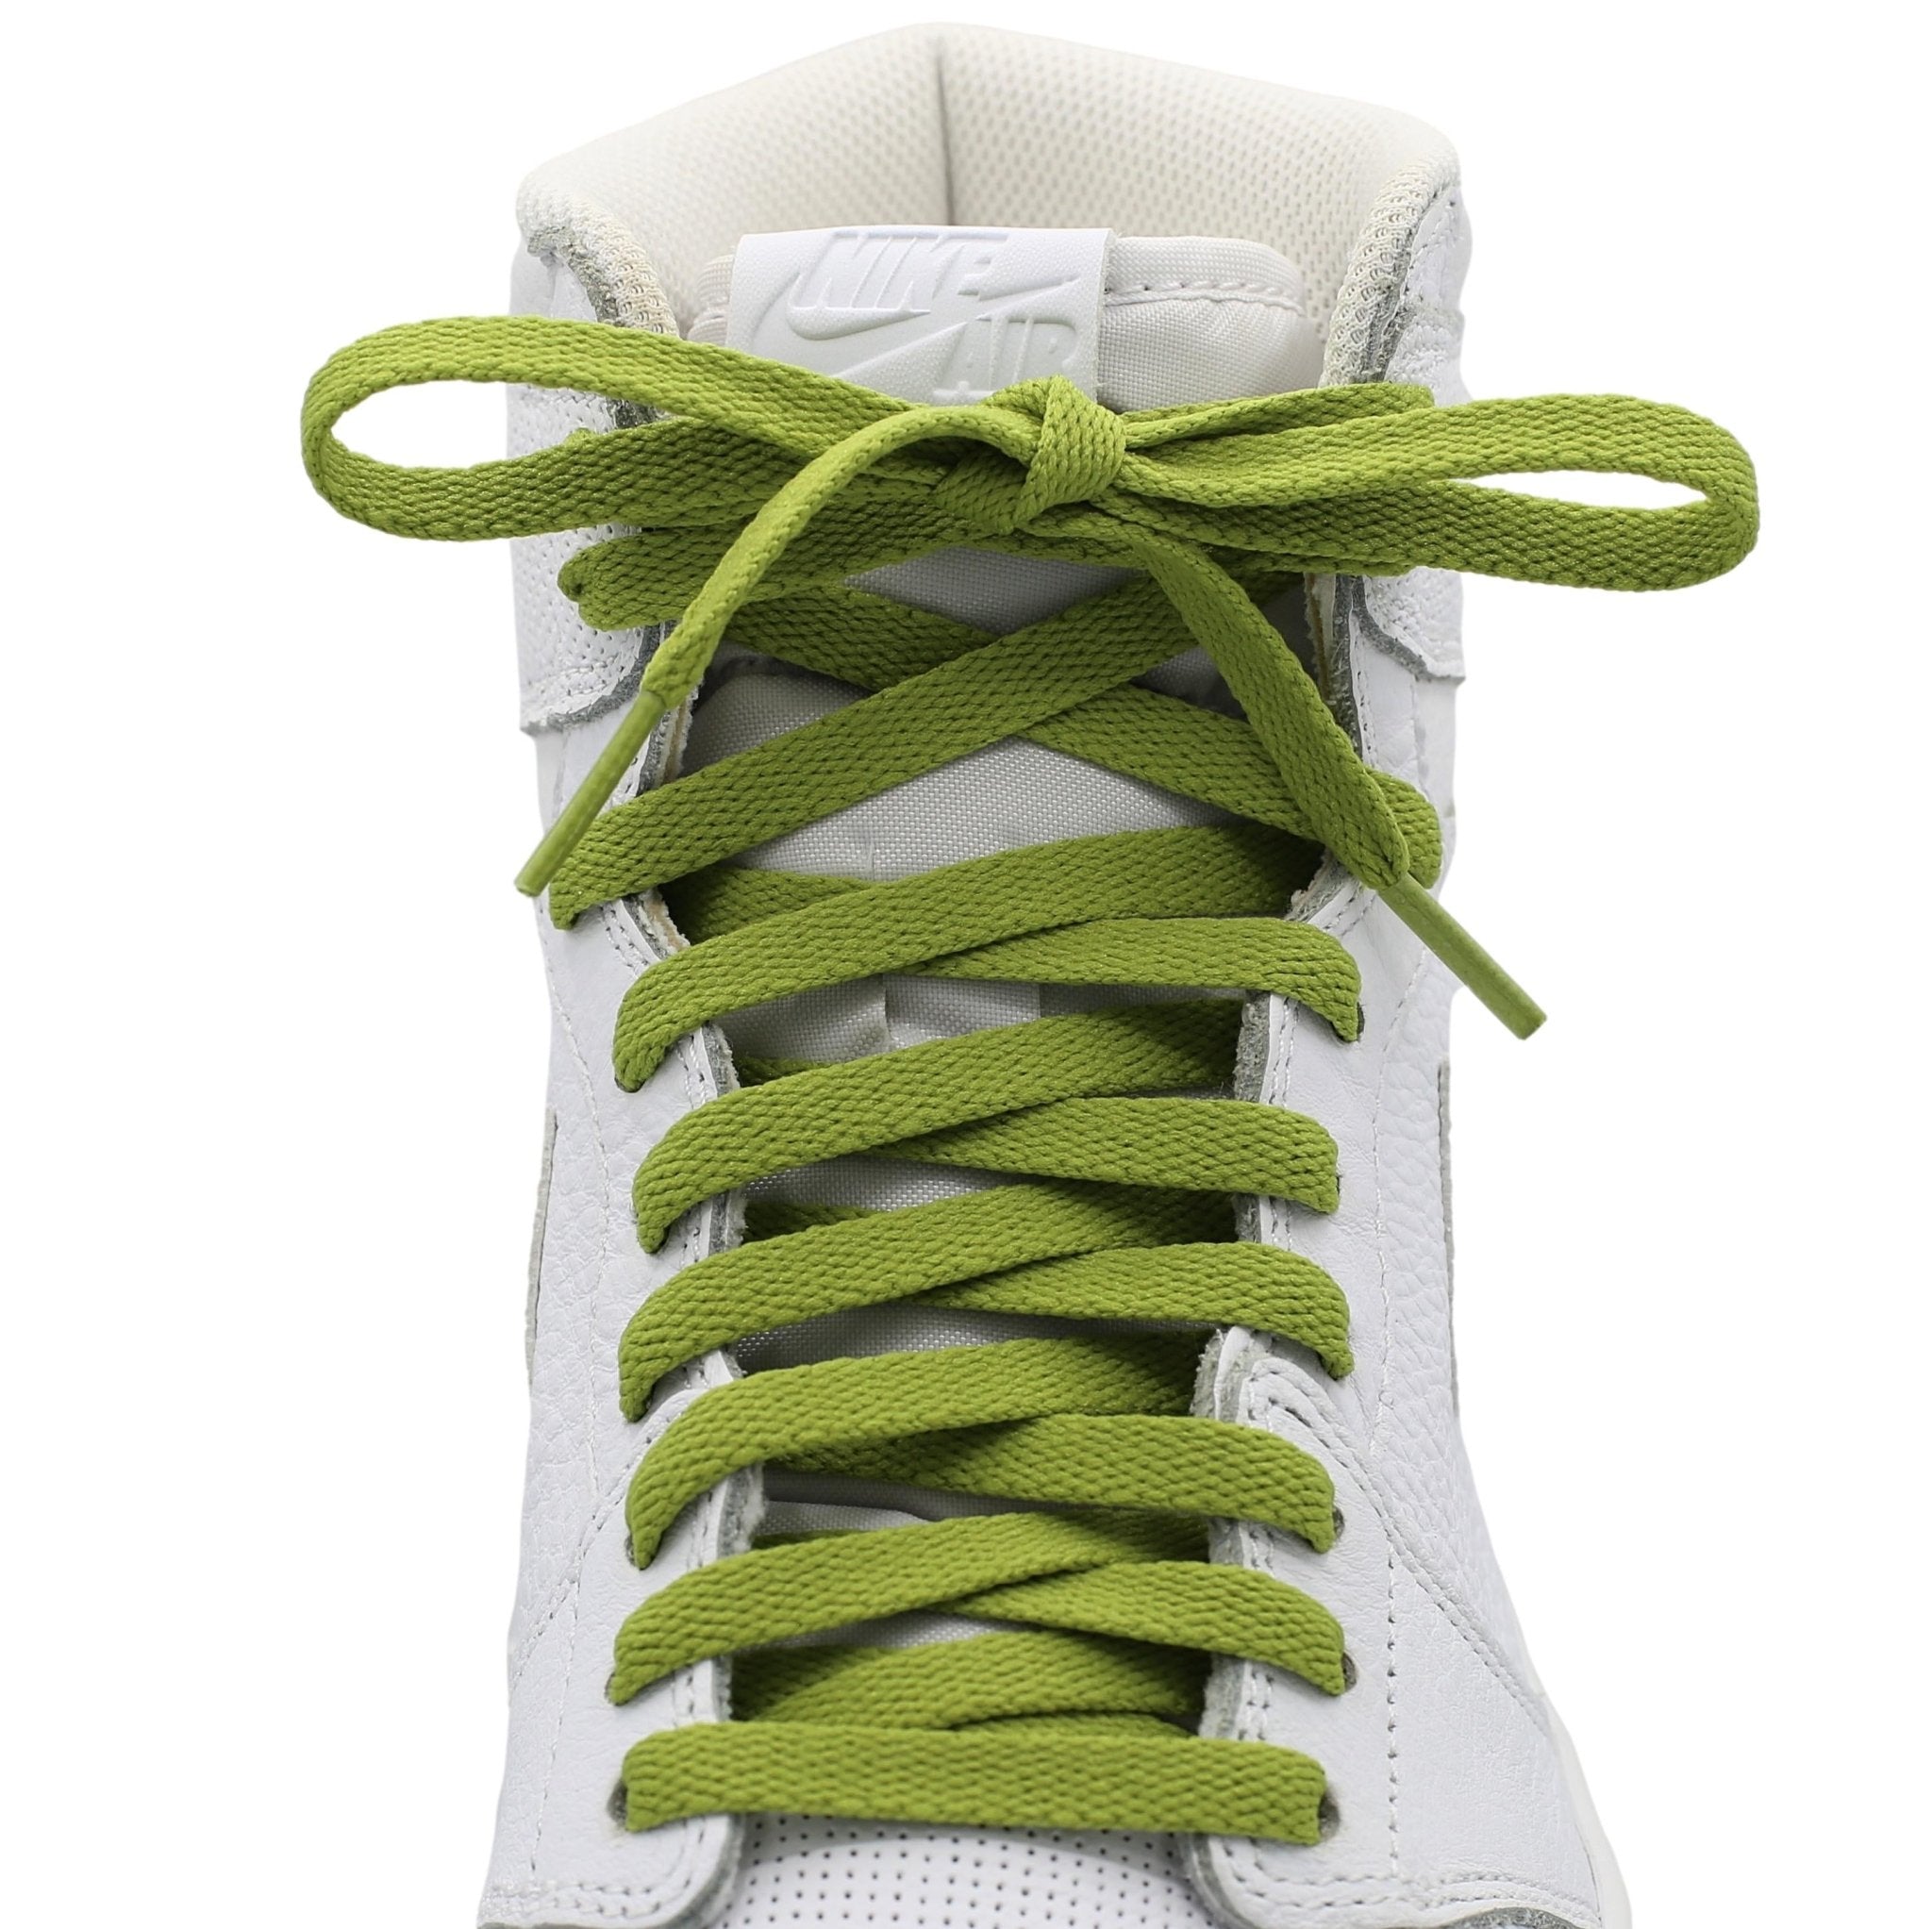 Jordan 1 Replacement Shoelaces